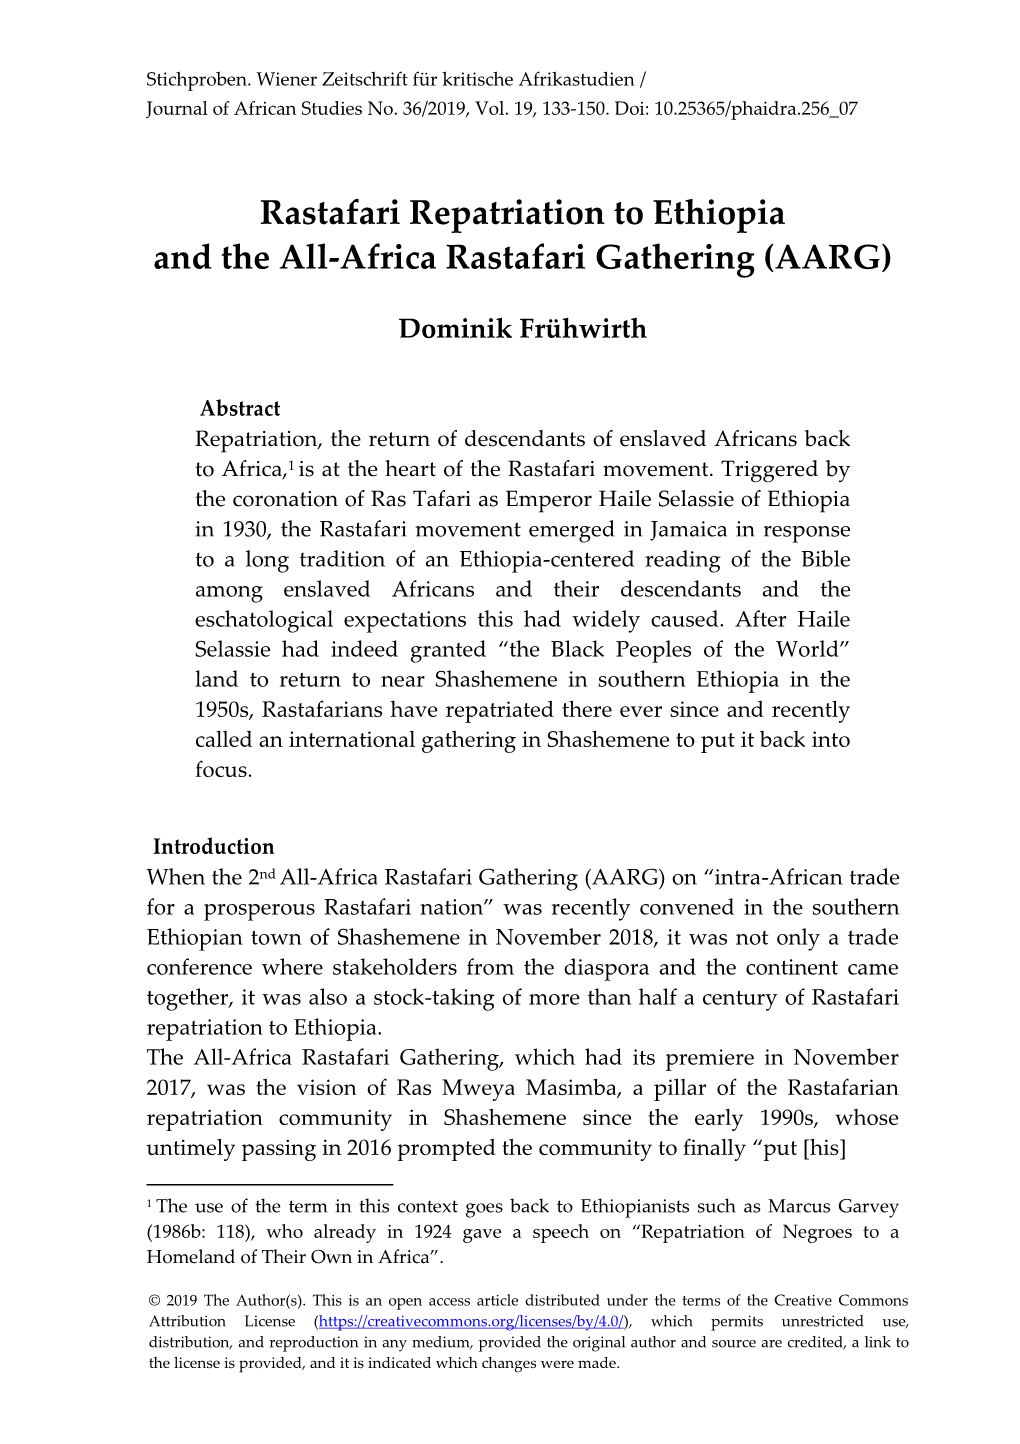 Rastafari Repatriation to Ethiopia and the All-Africa Rastafari Gathering (AARG)